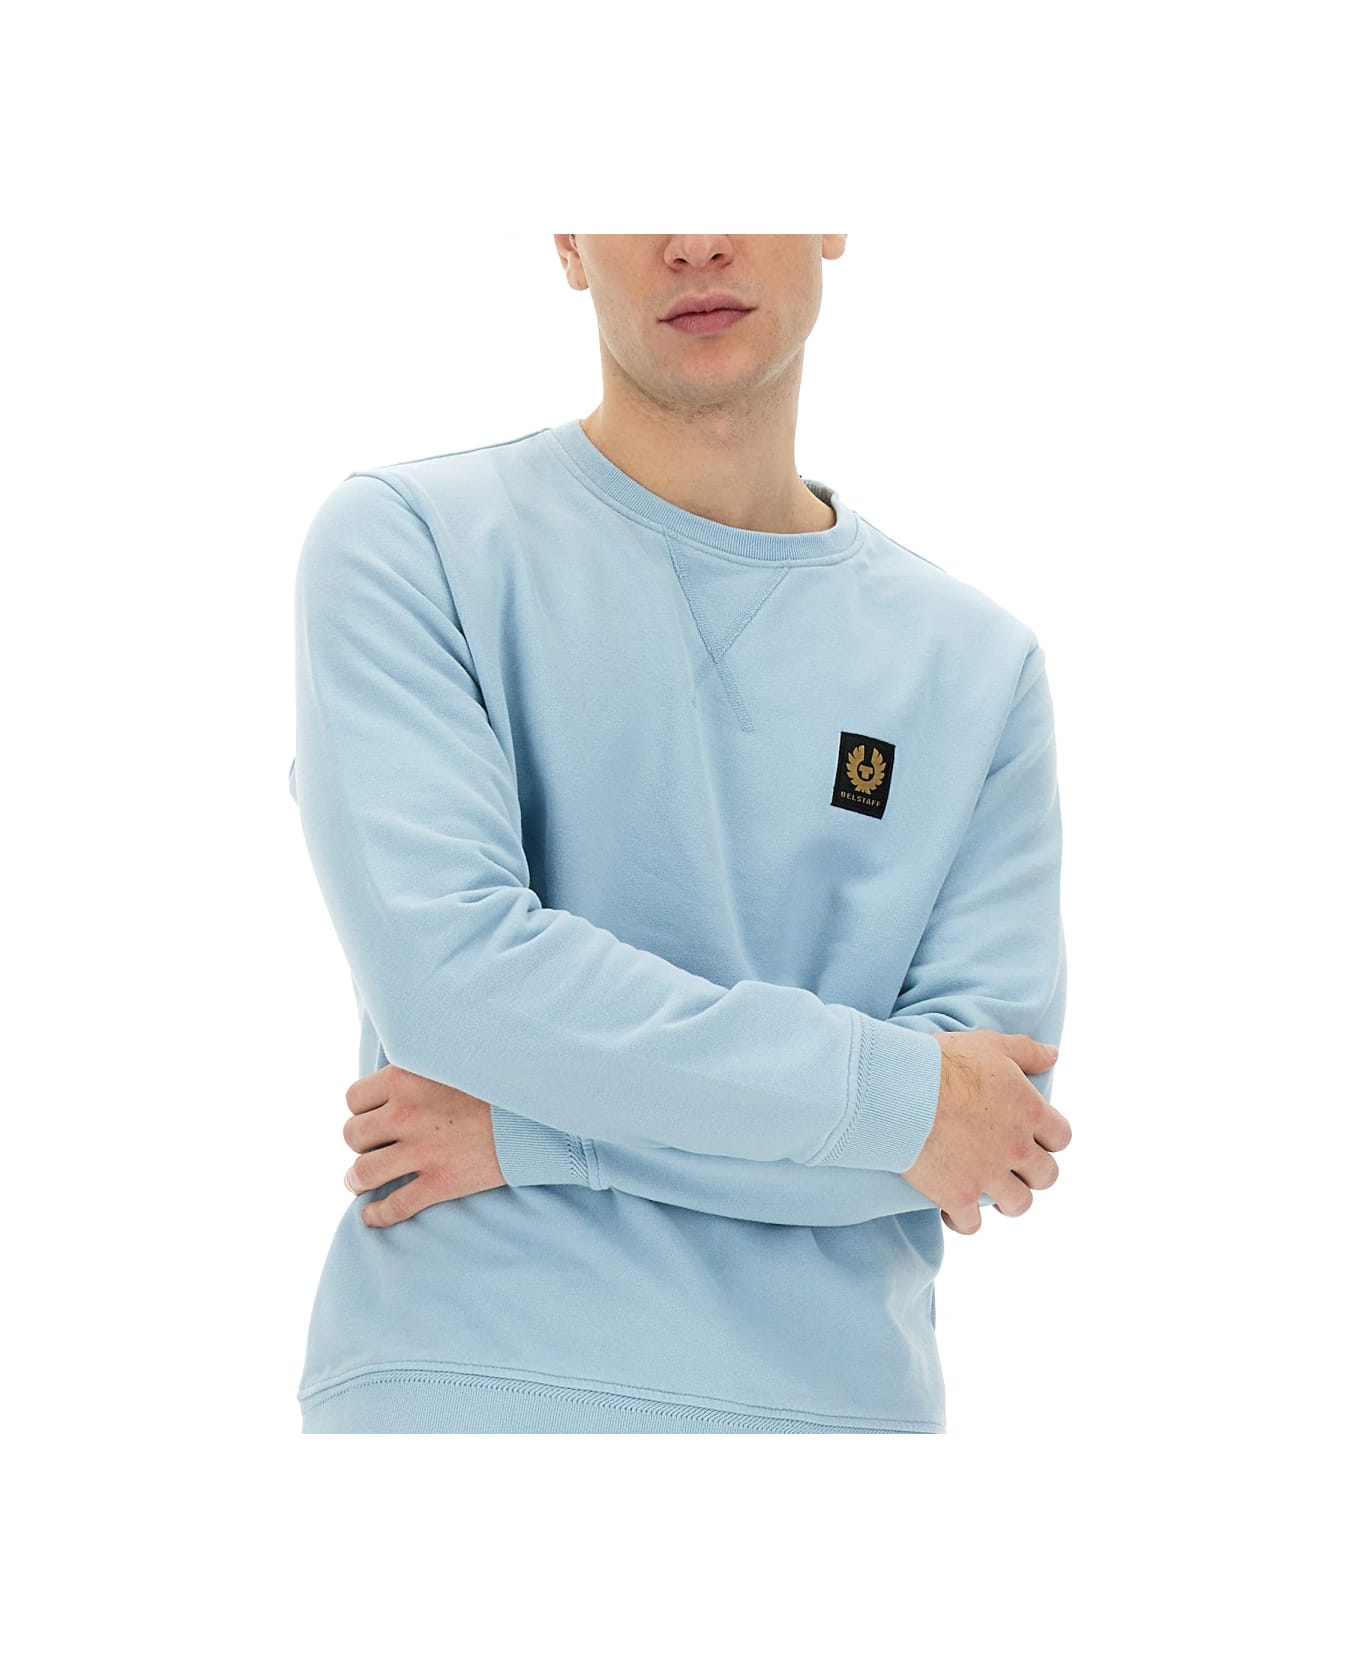 Belstaff Sweatshirt With Logo - BLUE